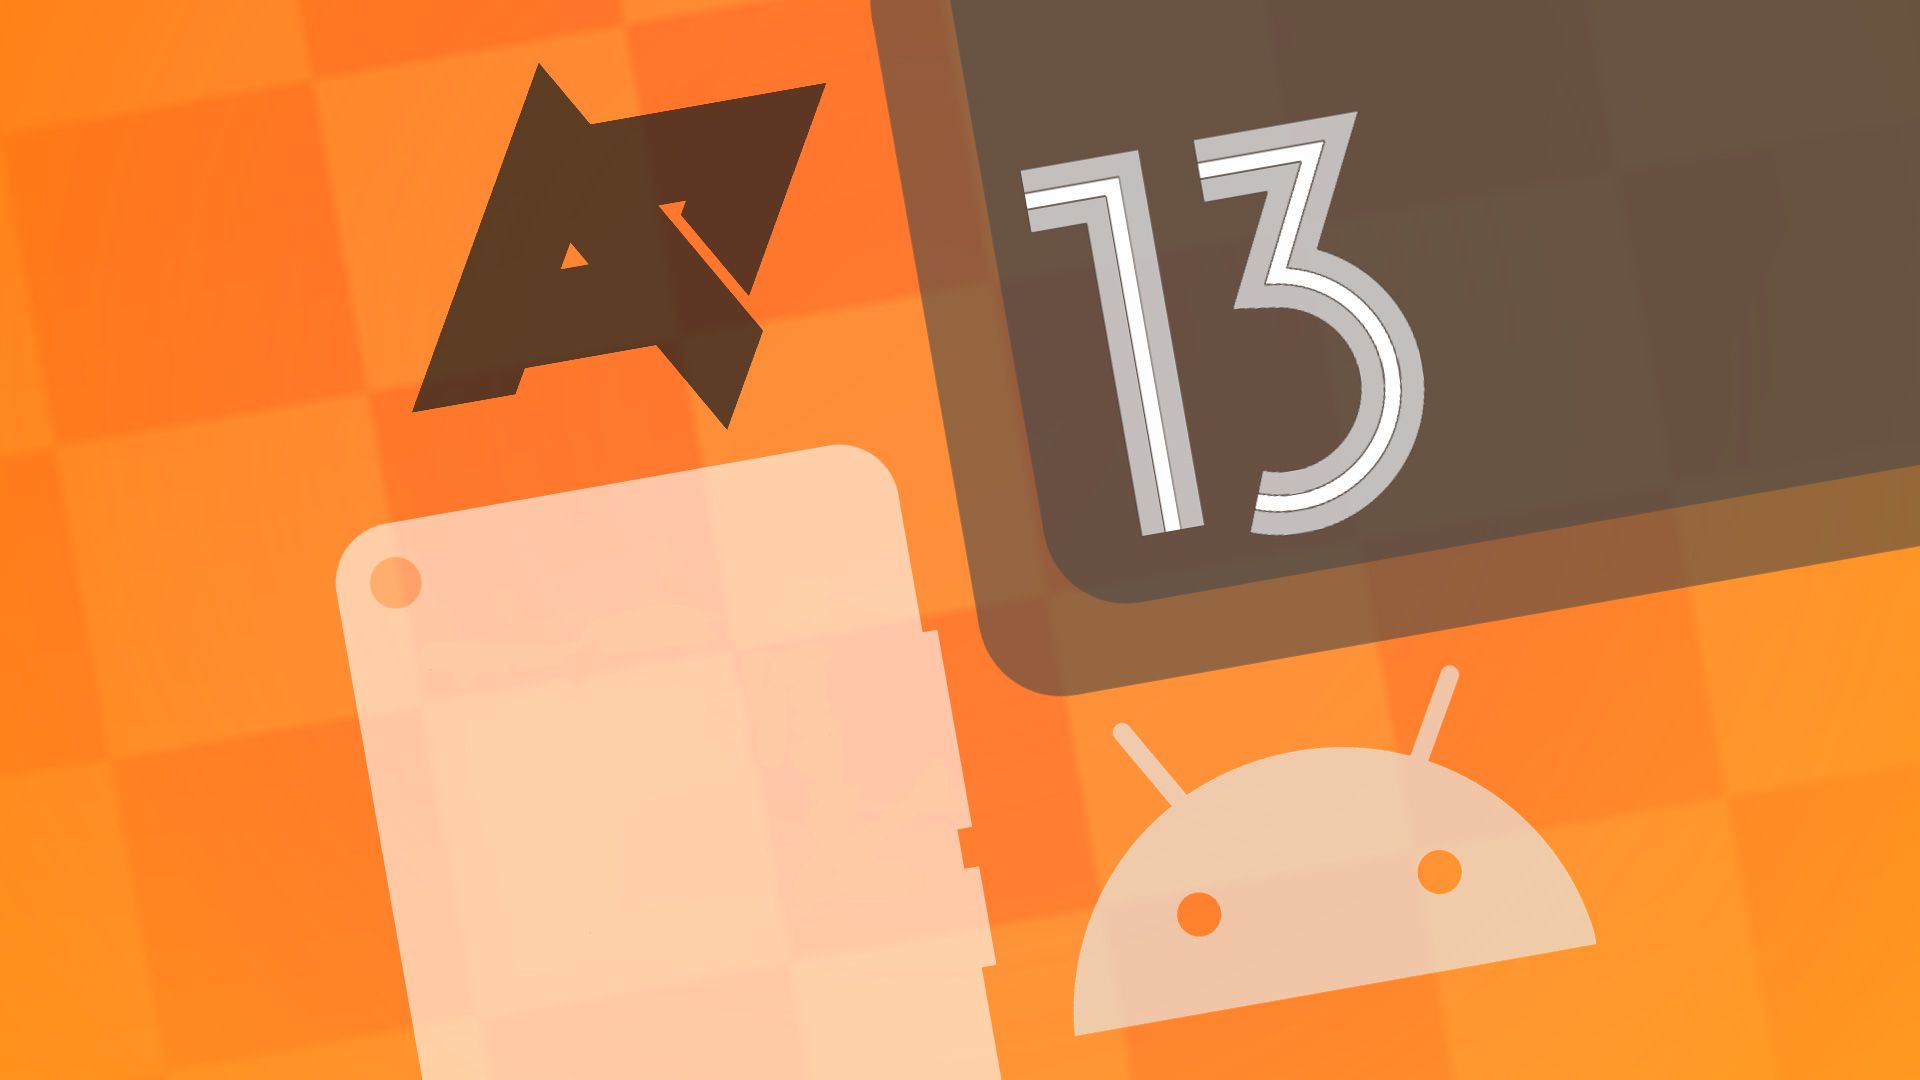 android-13-hero-orange-removed-12l